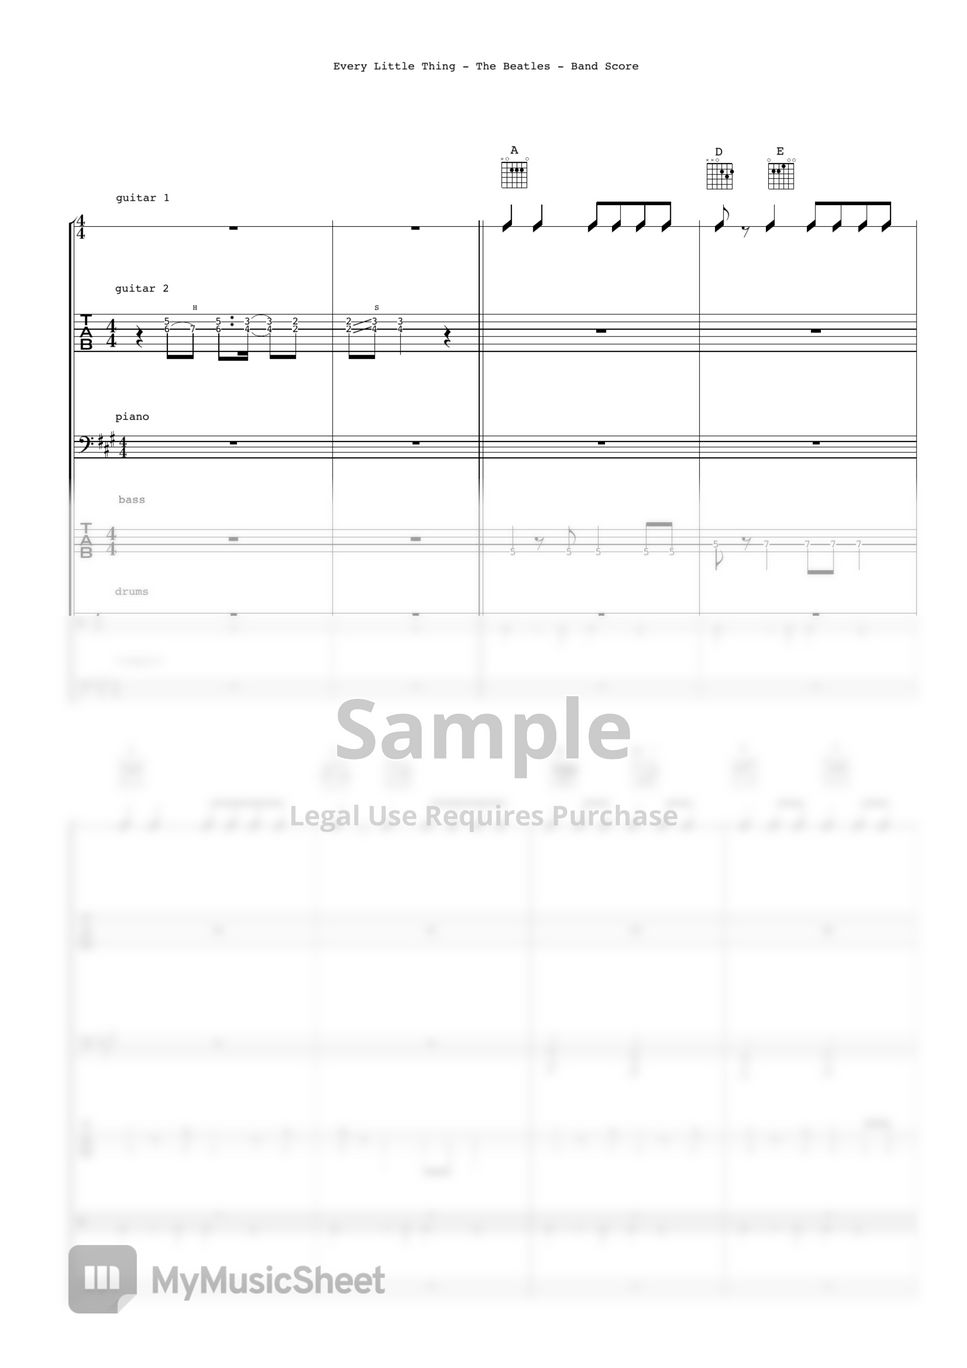 The Beatles - Every Little Thing (Band Score) by Ryohei Kanayama